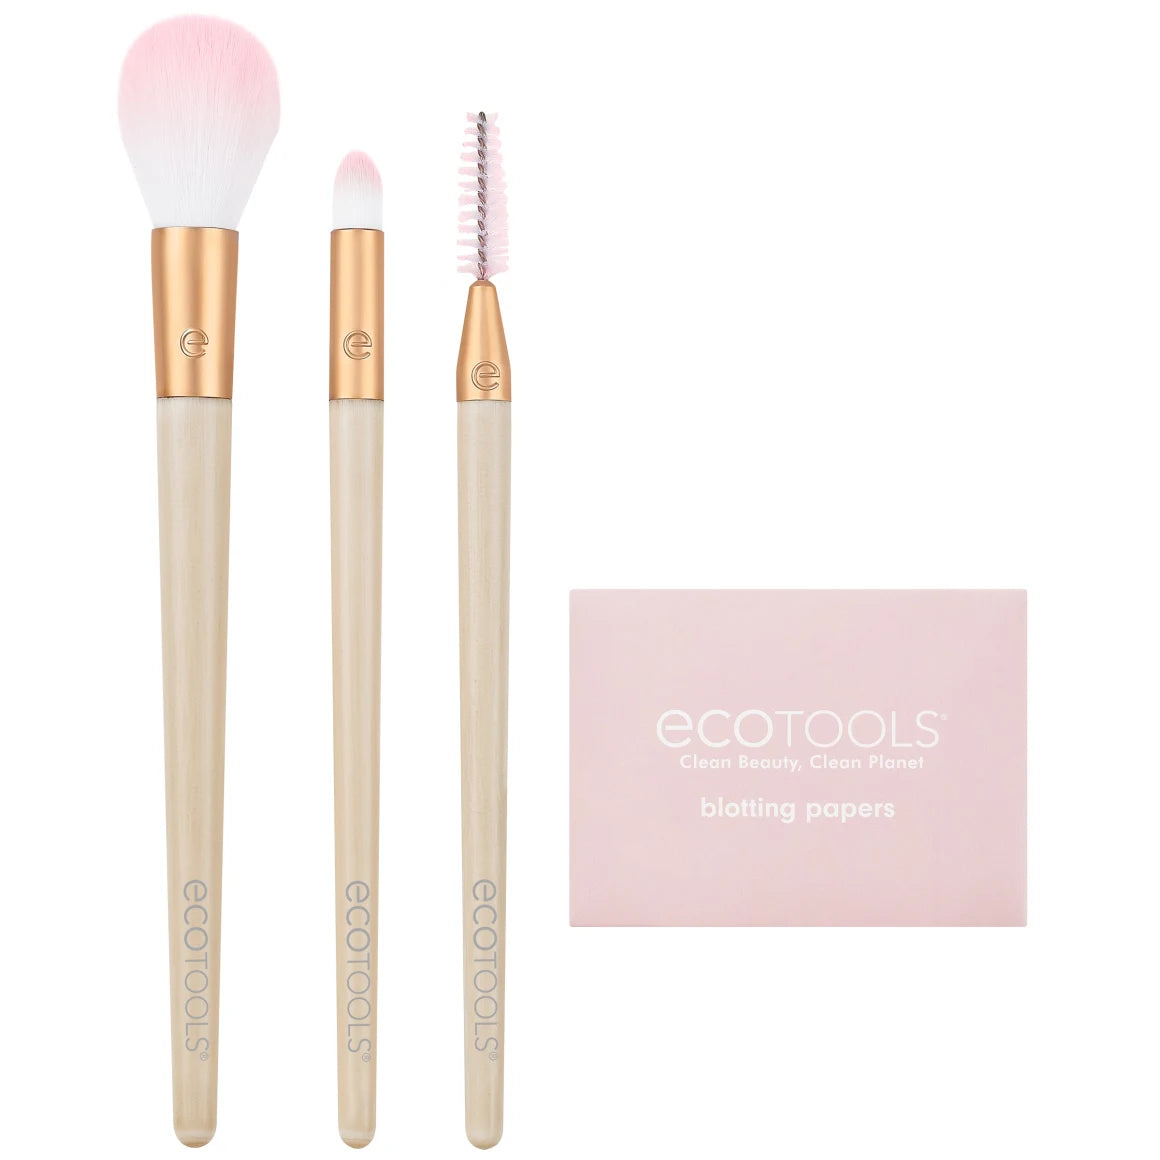 ECOTOOLS Clean beauty clean plant Set + Slight Limited Edition مجموعة فرش المكياج الاساسية